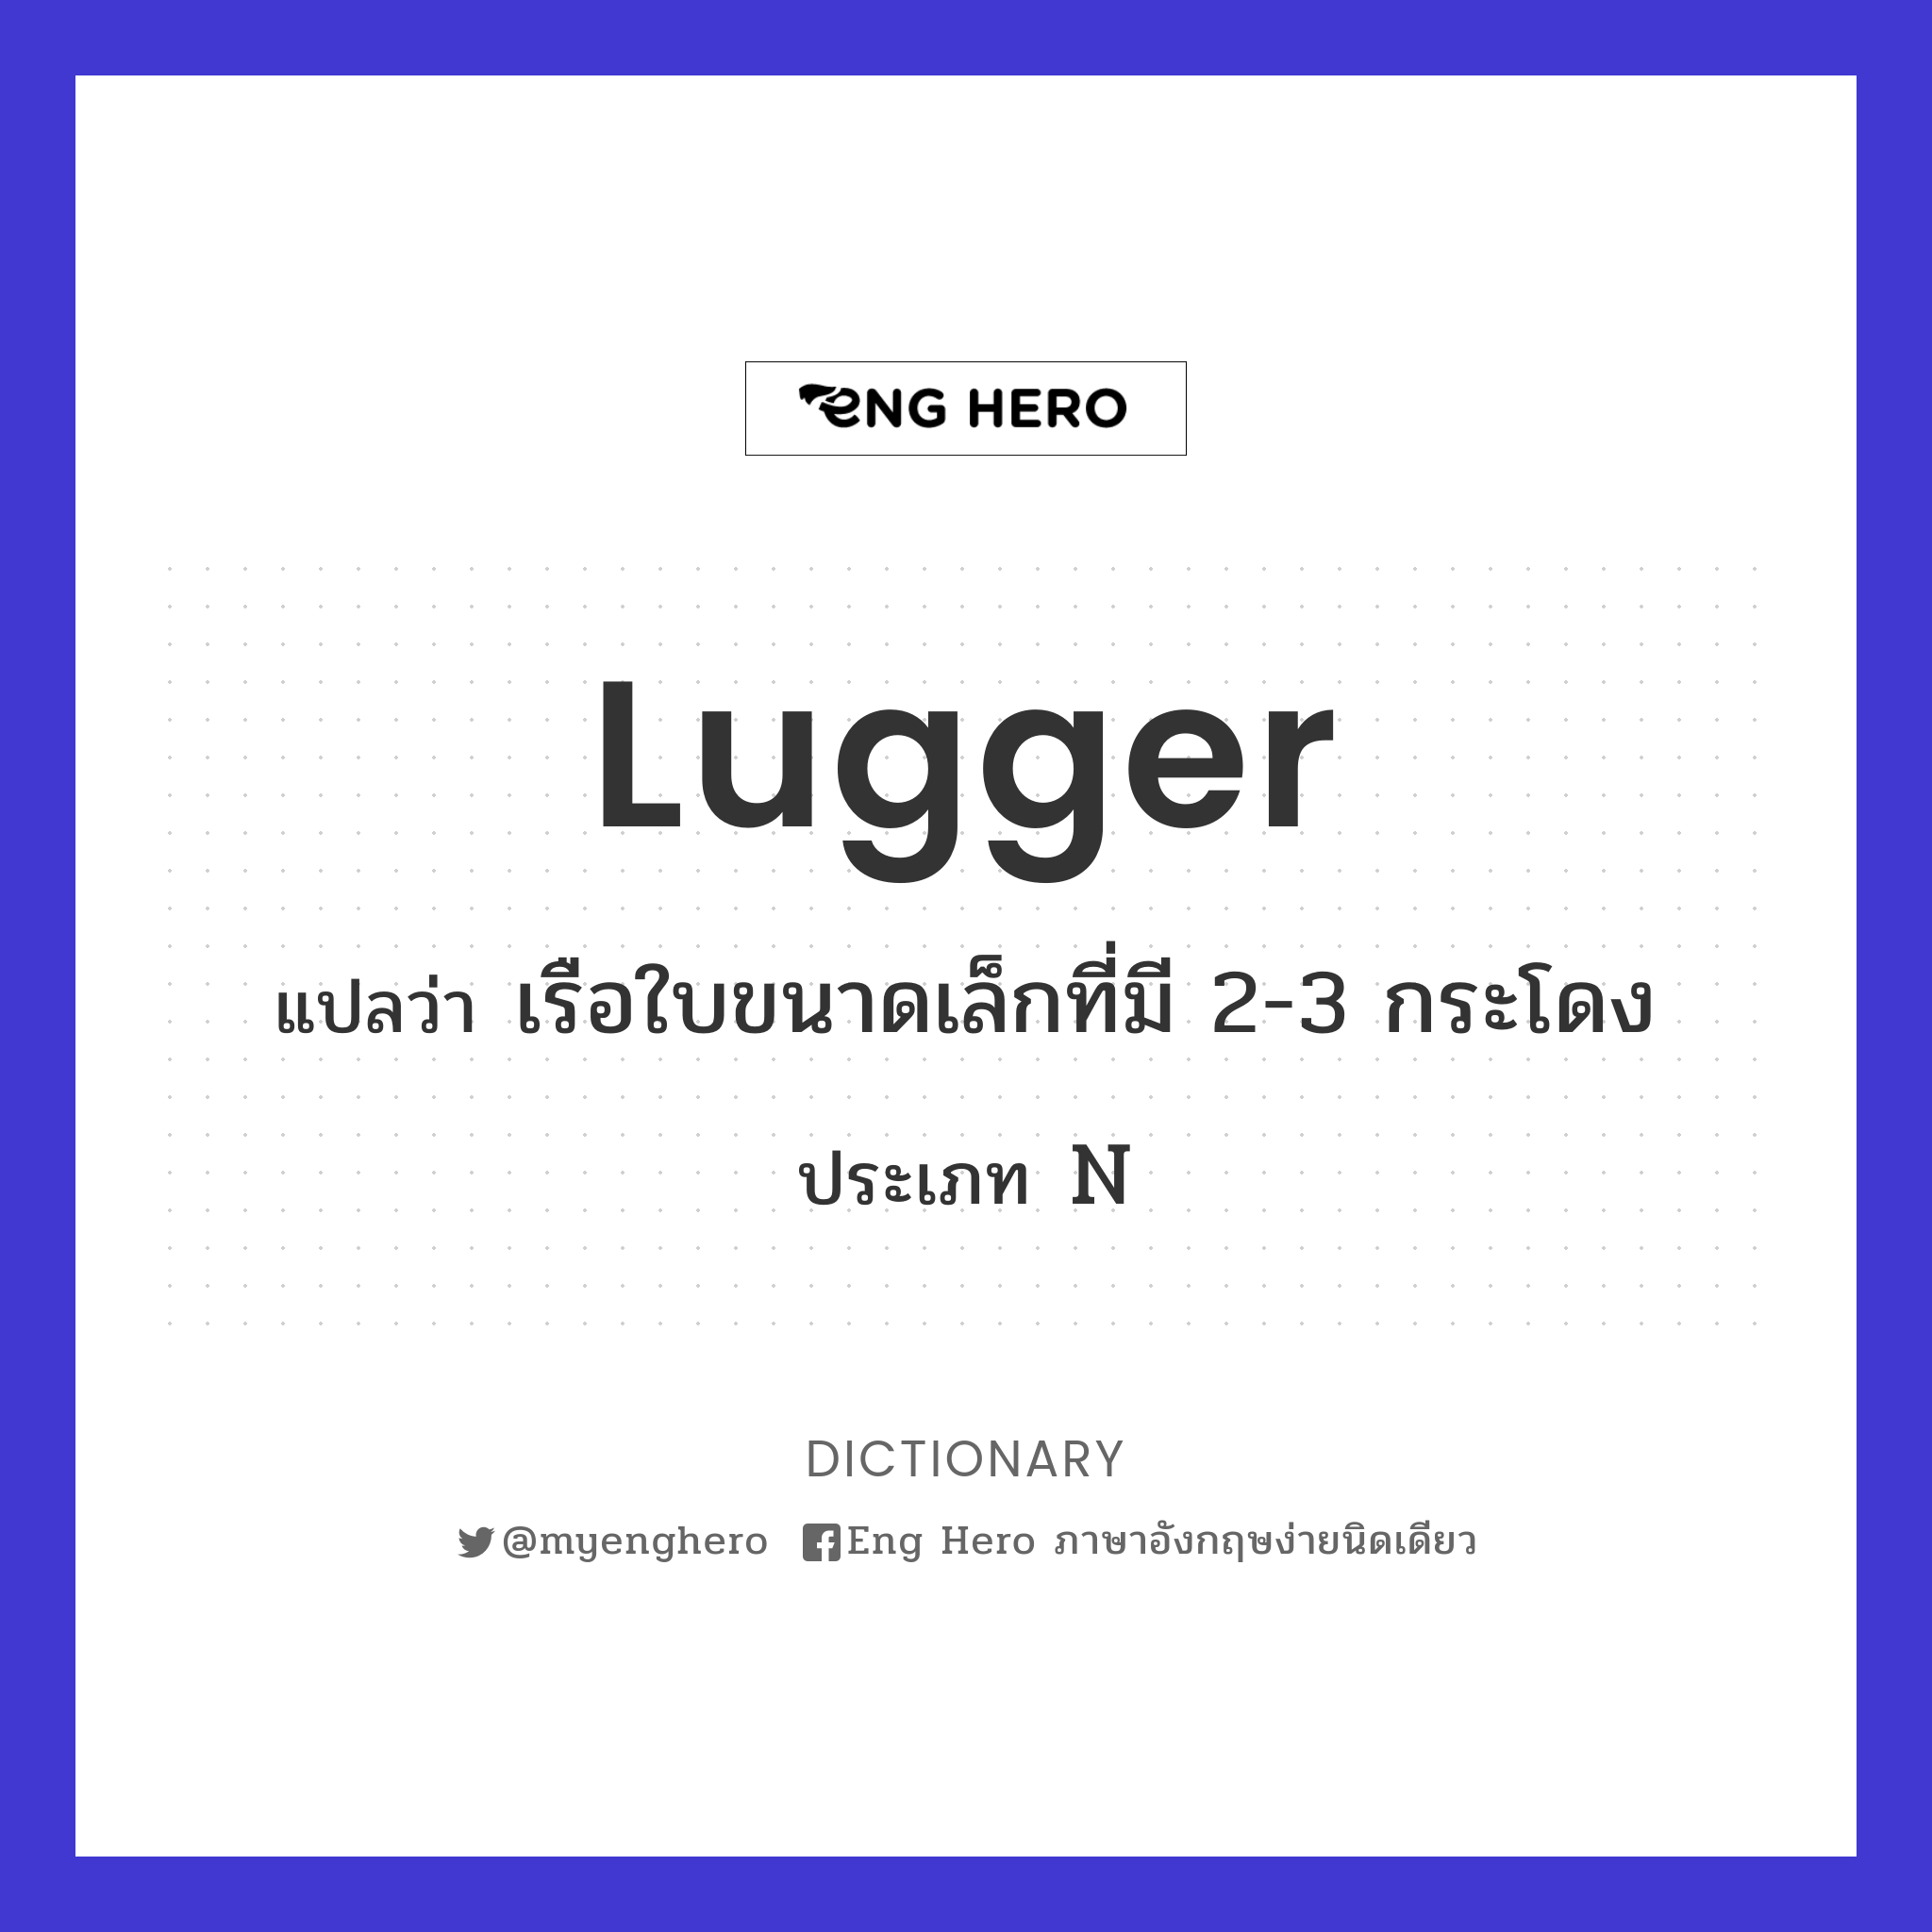 lugger